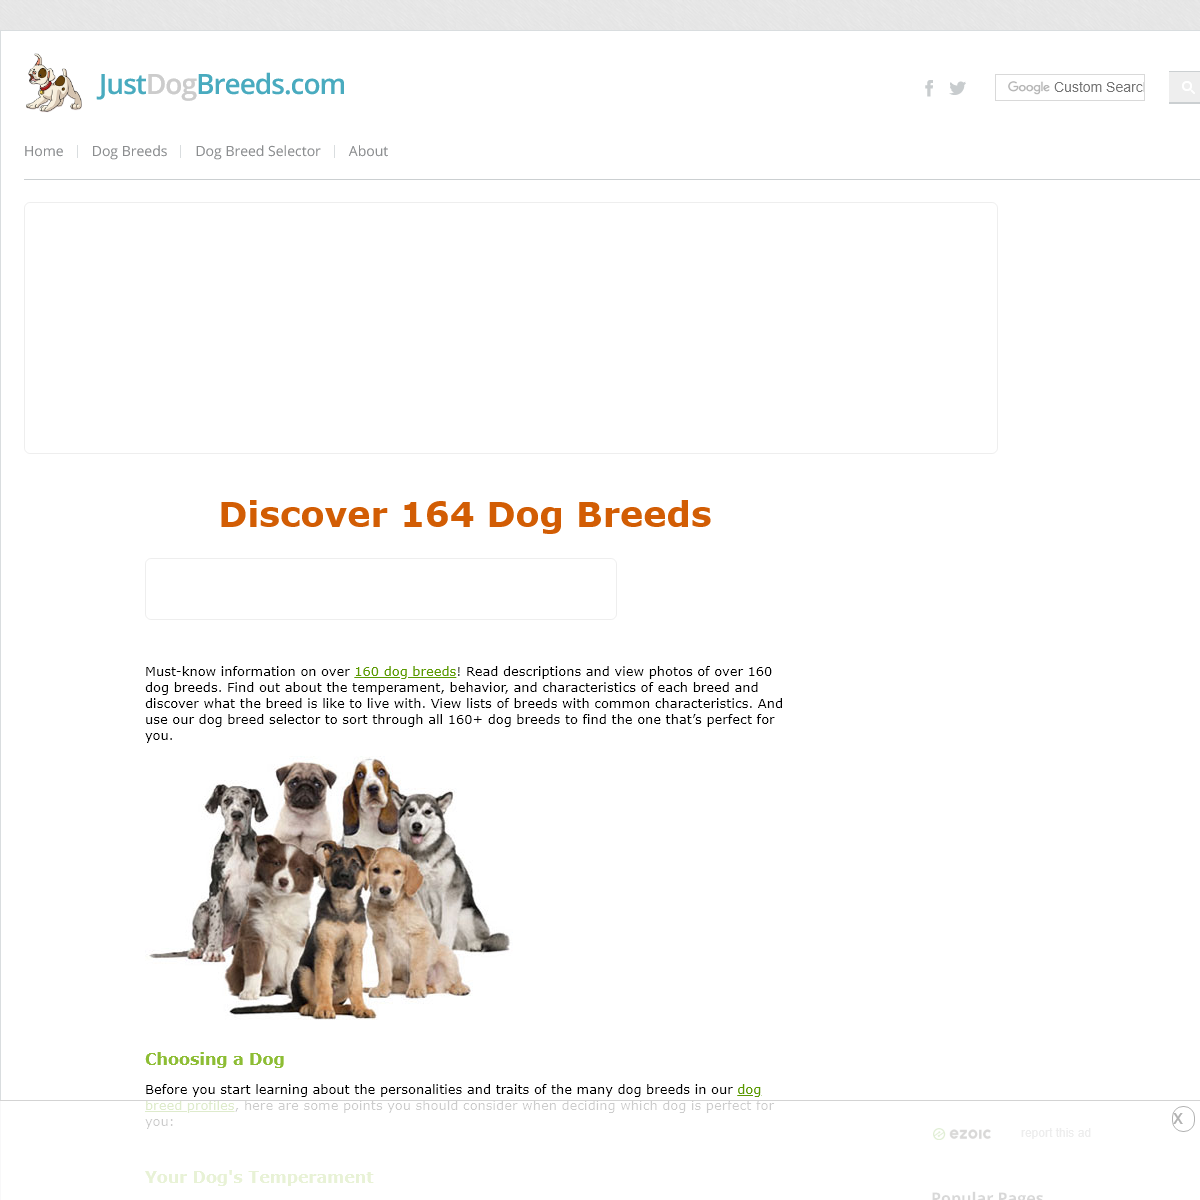 A complete backup of justdogbreeds.com